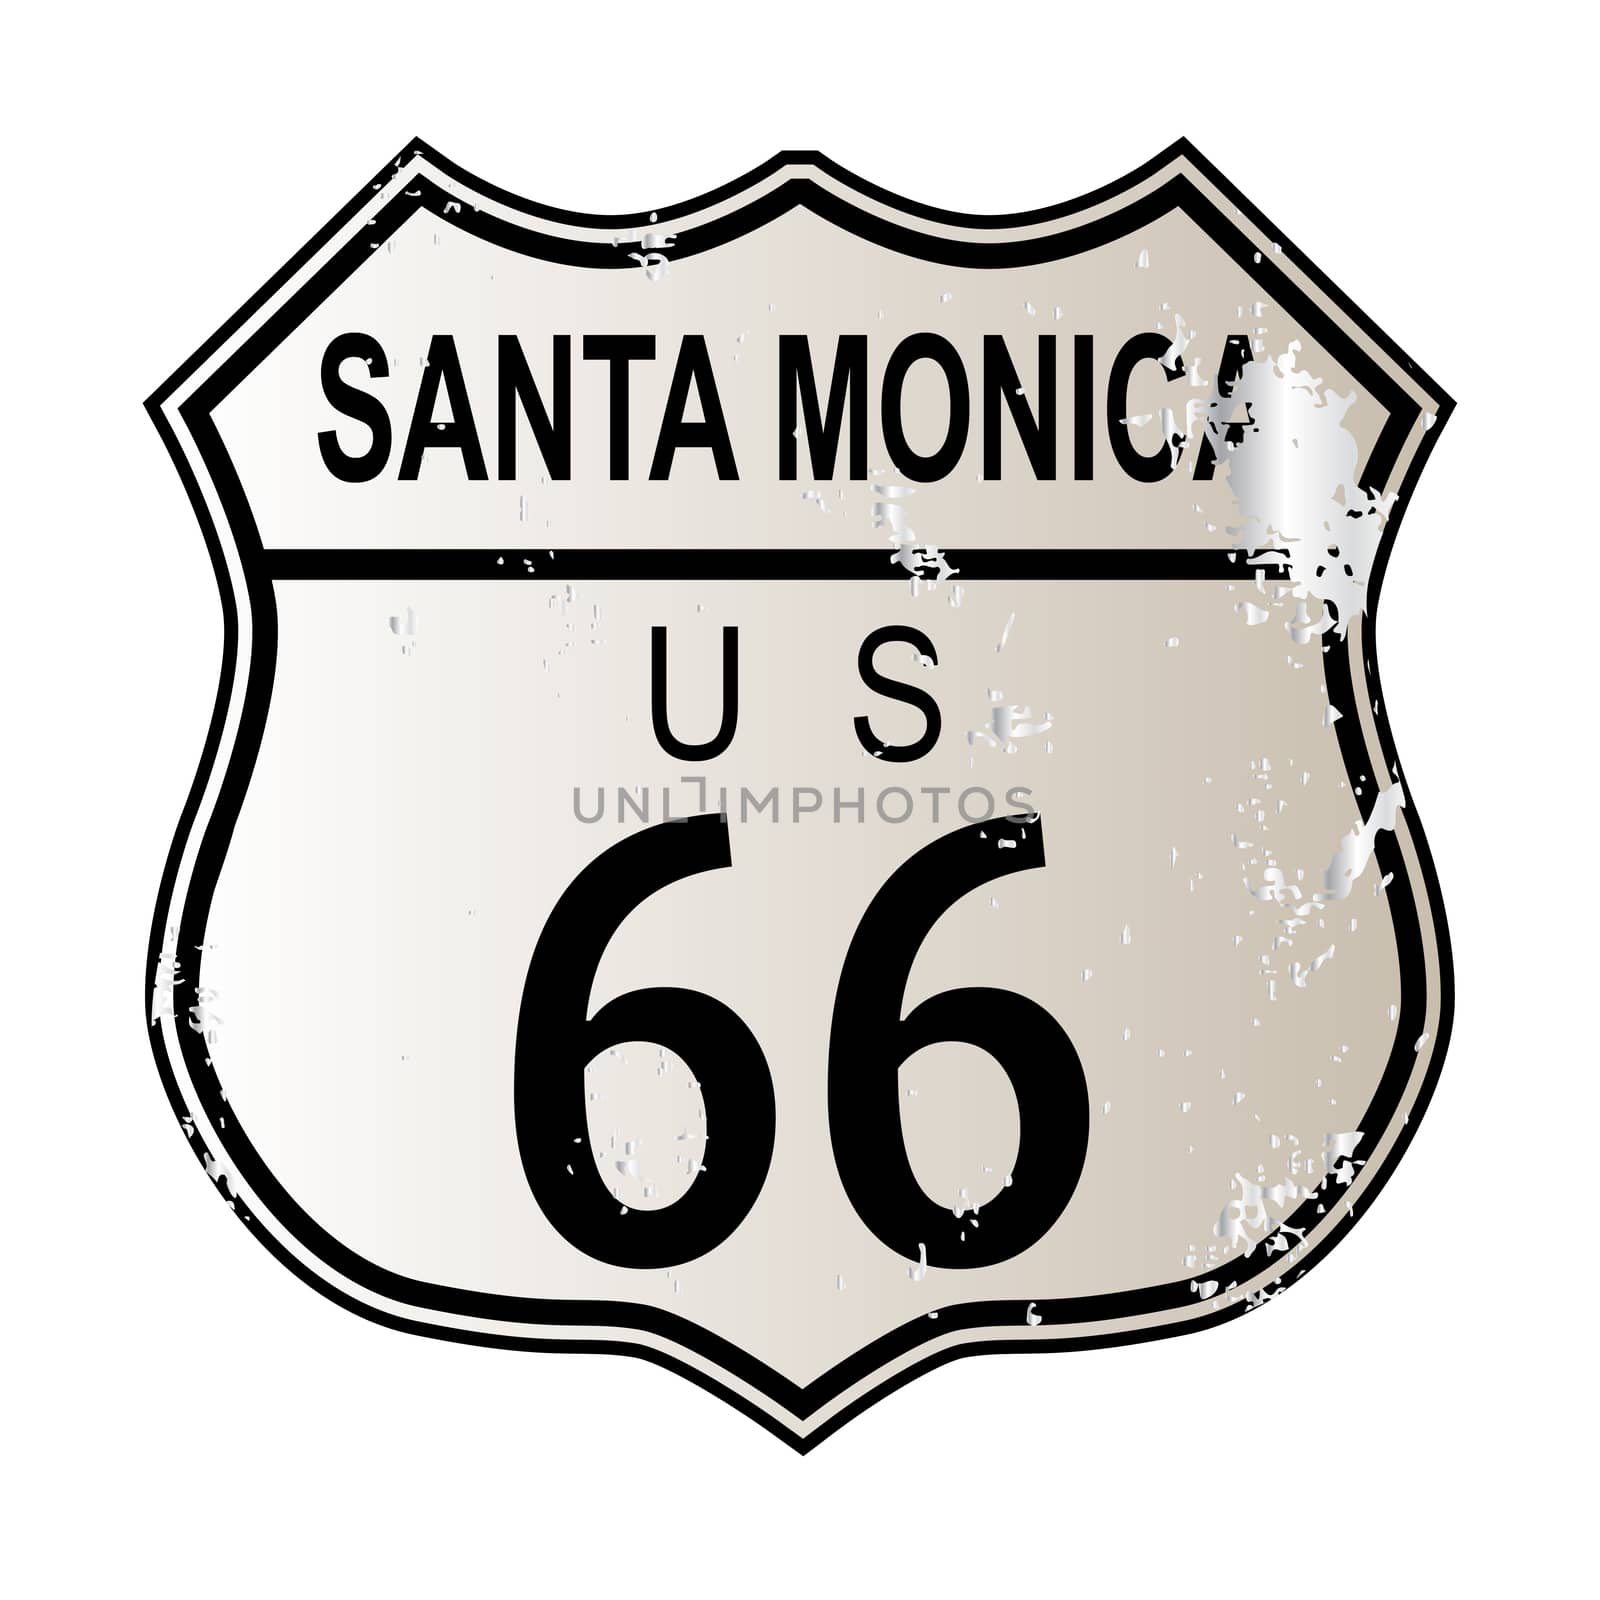 Santa Monica Route 66 by Bigalbaloo